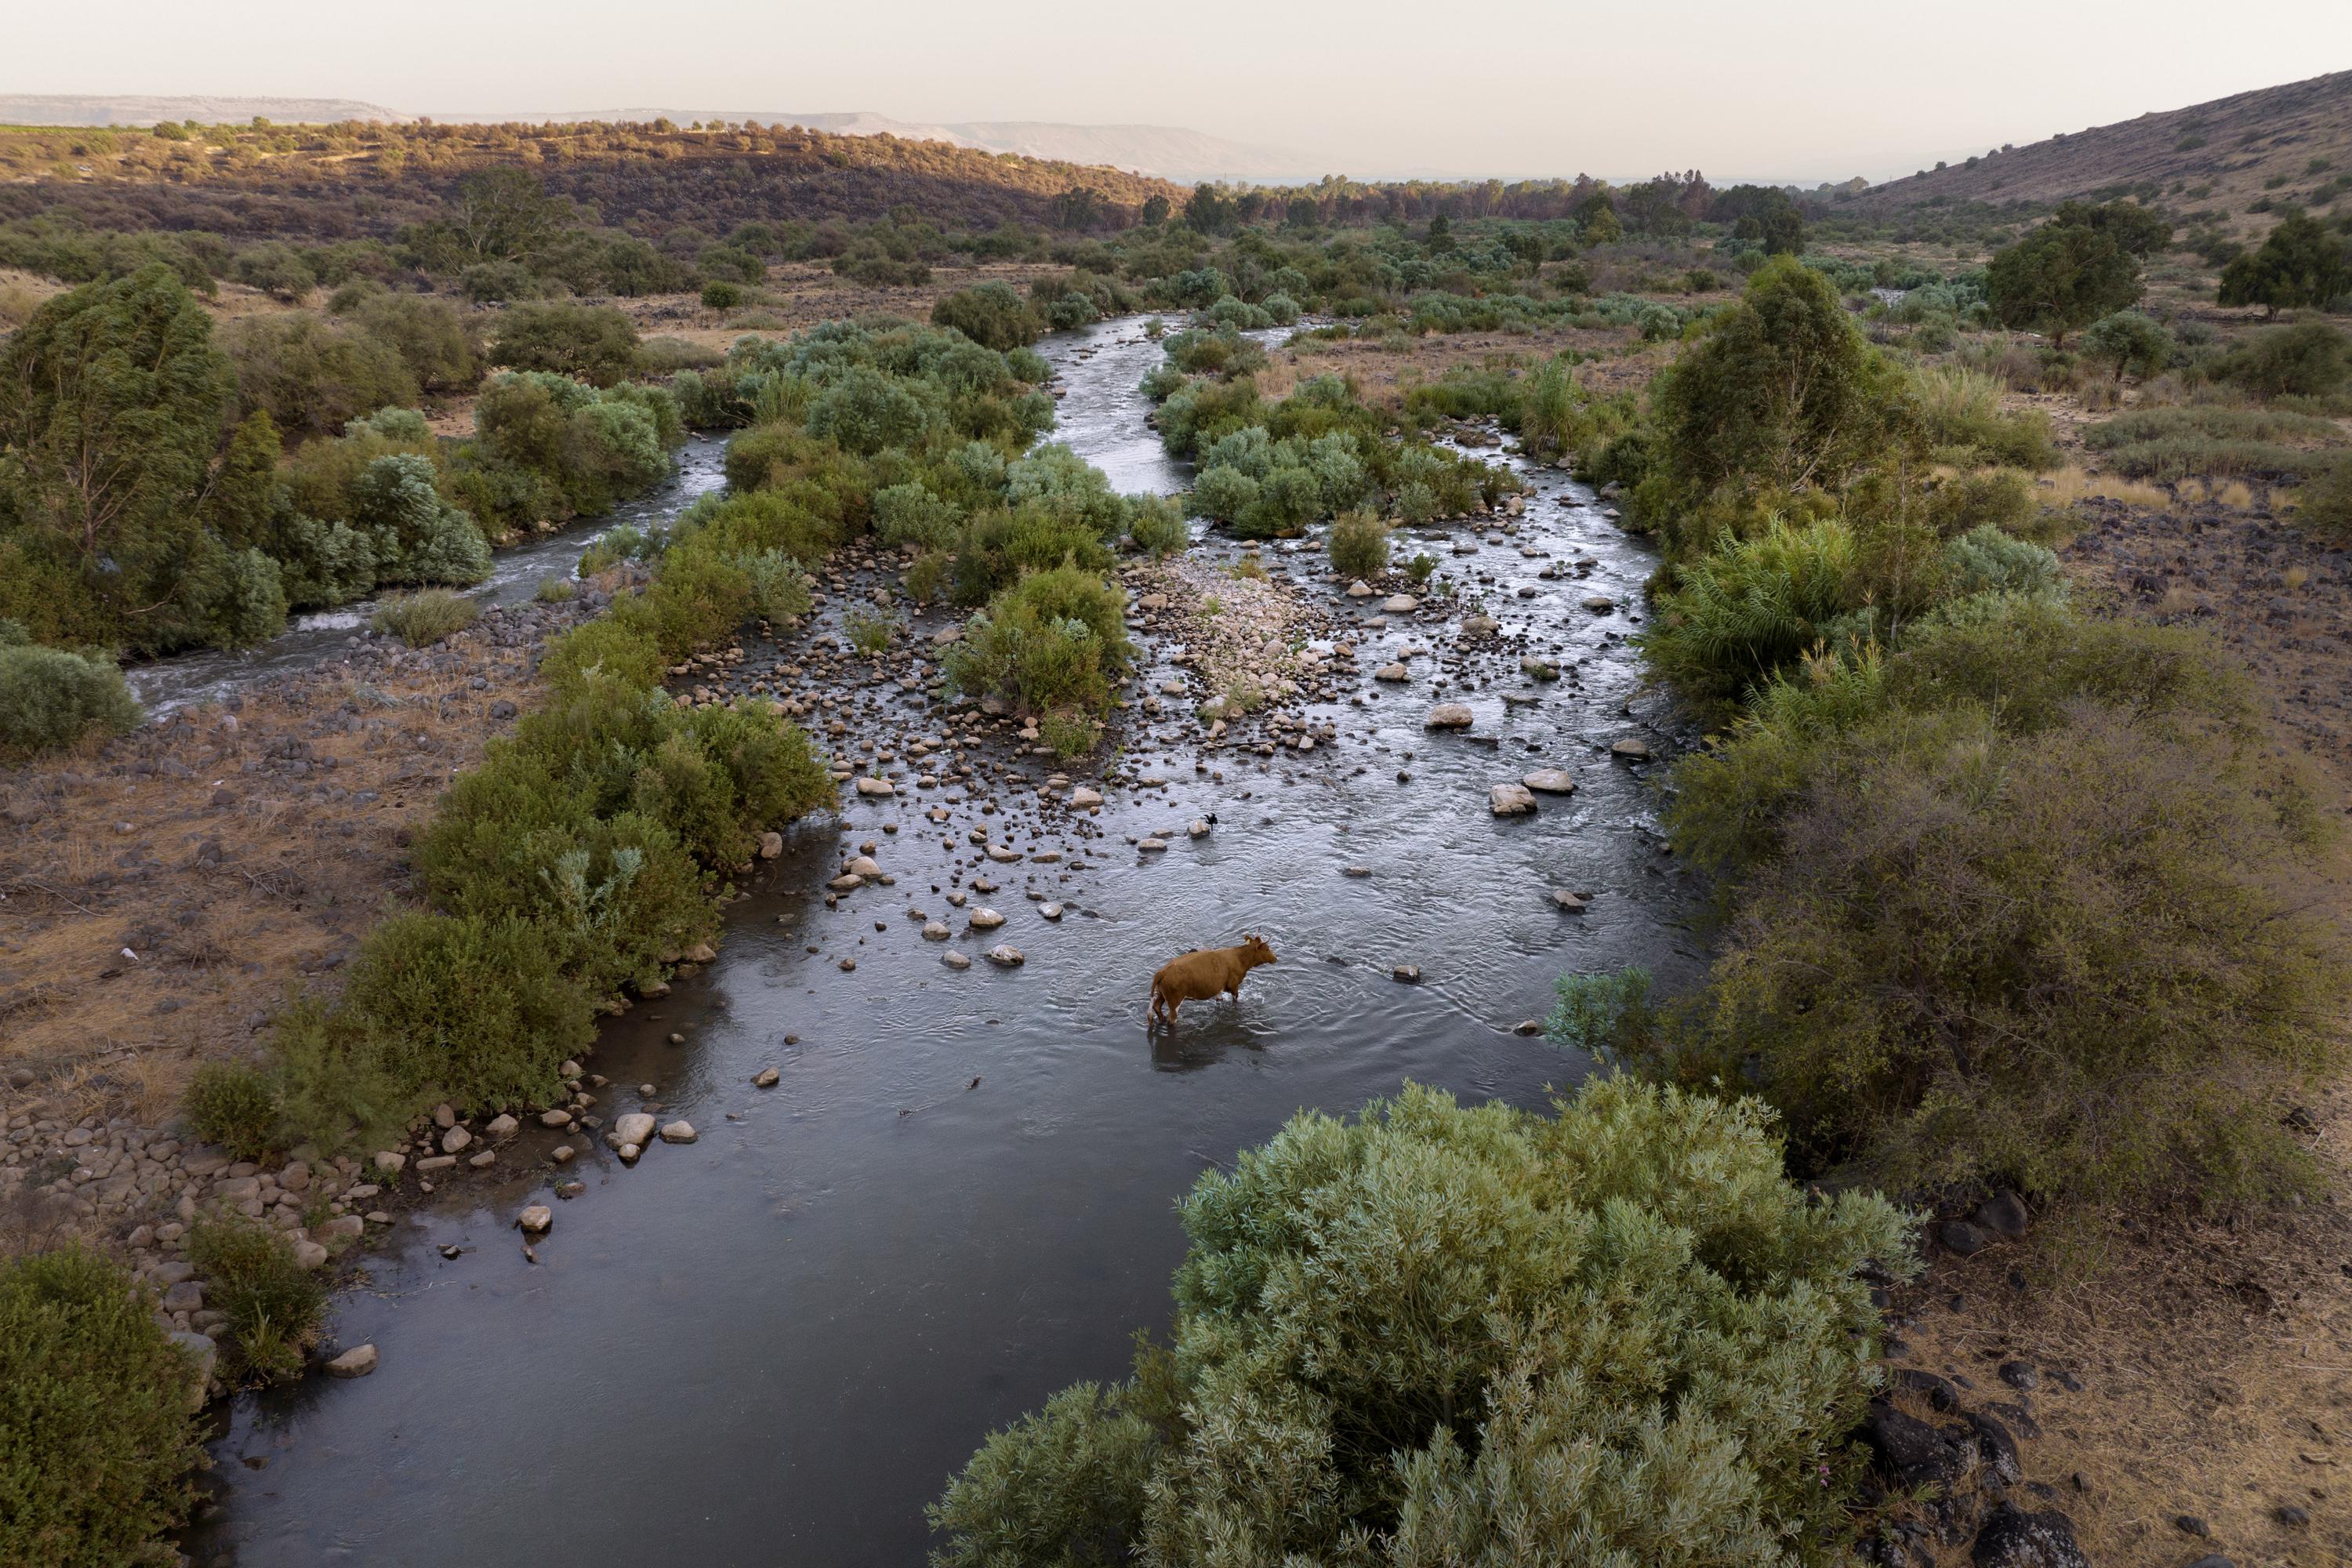 Israel and Jordan agree to team up to save Jordan River